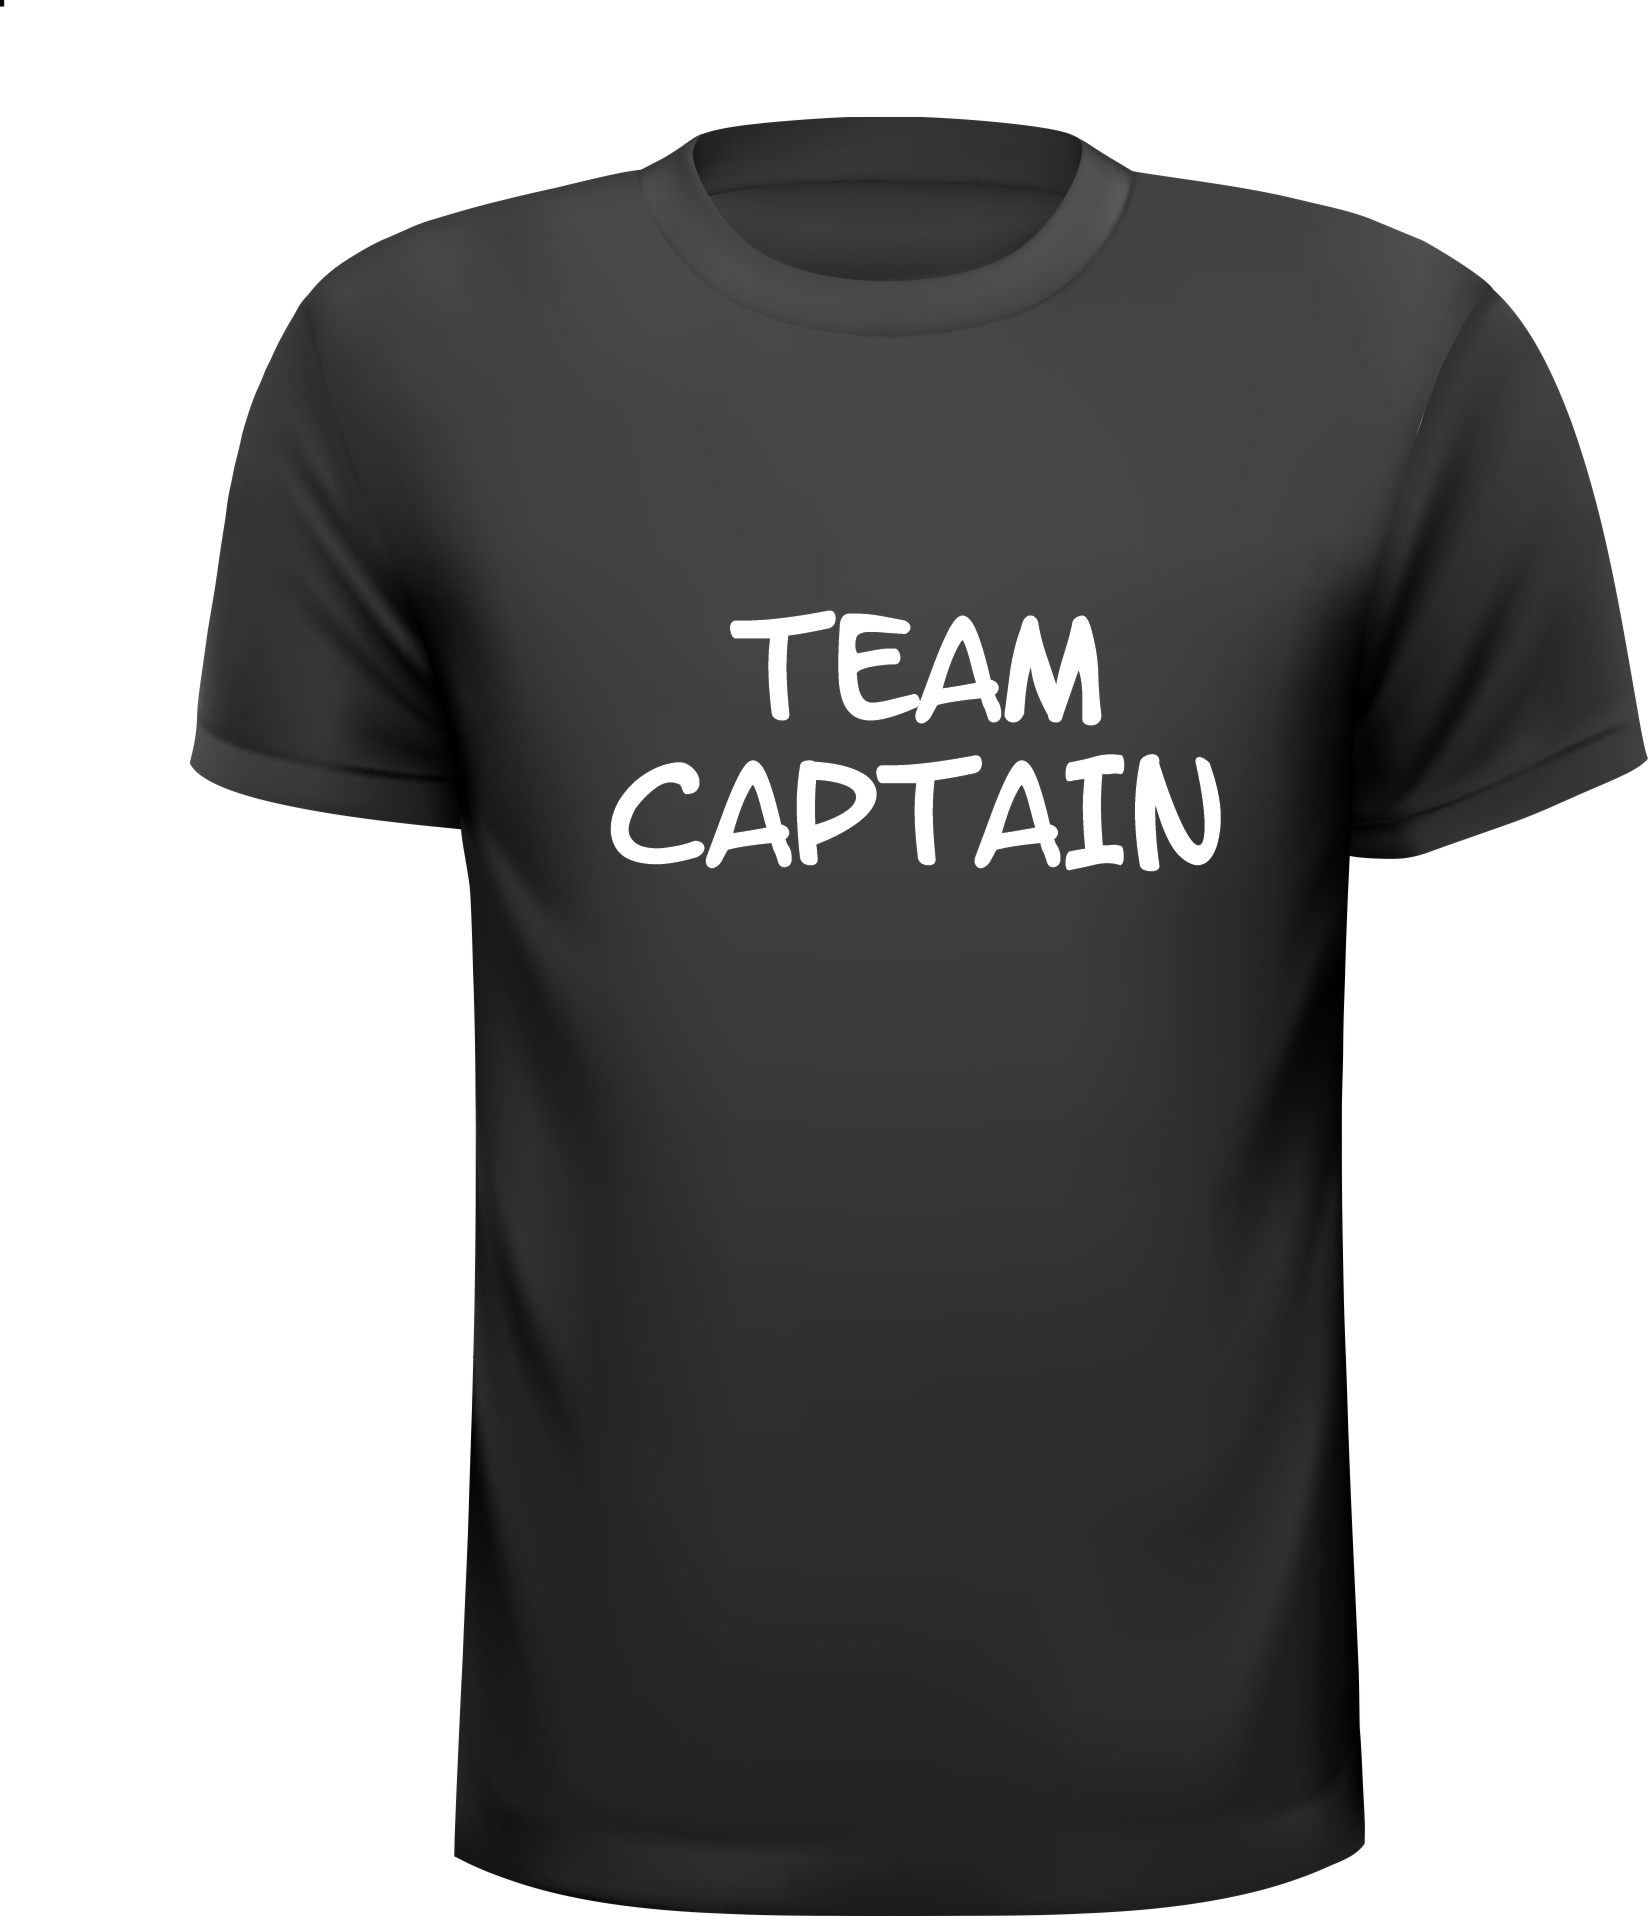 T-shirt team captain